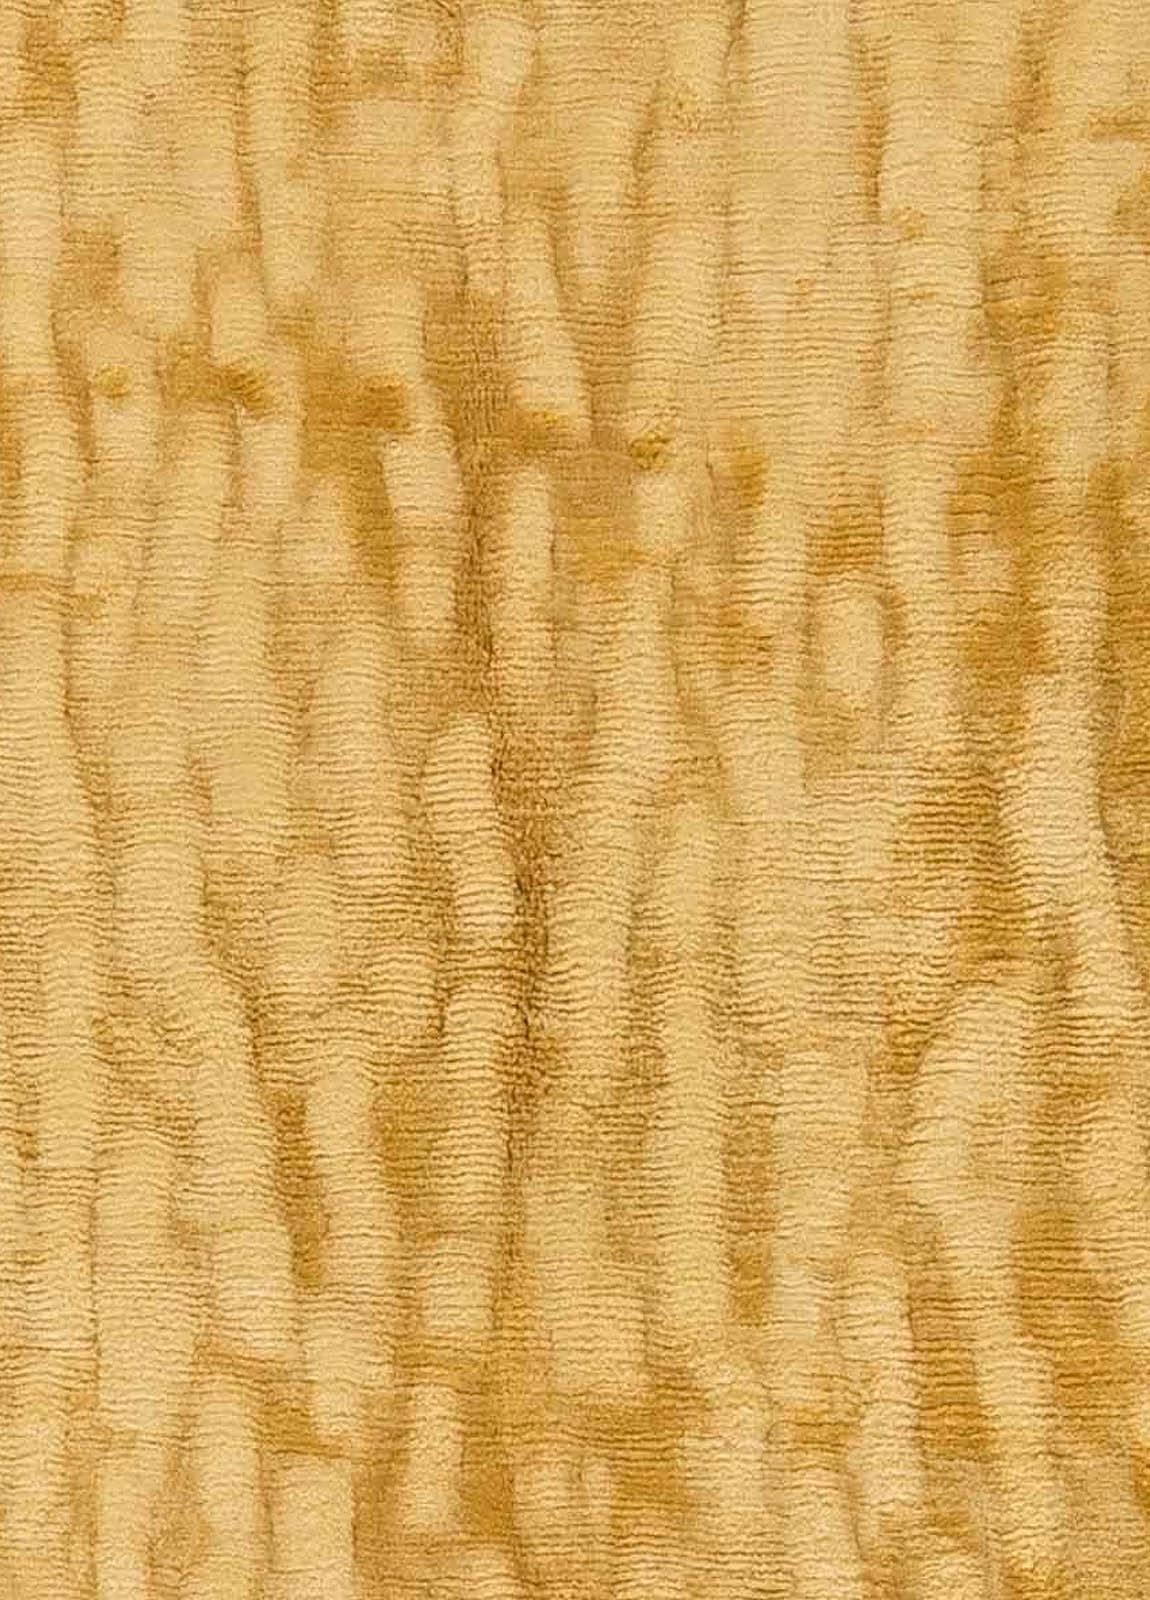 Contemporary abstract sand dunes silk Tibetan rug by Doris Leslie Blau.
Size: 8'3